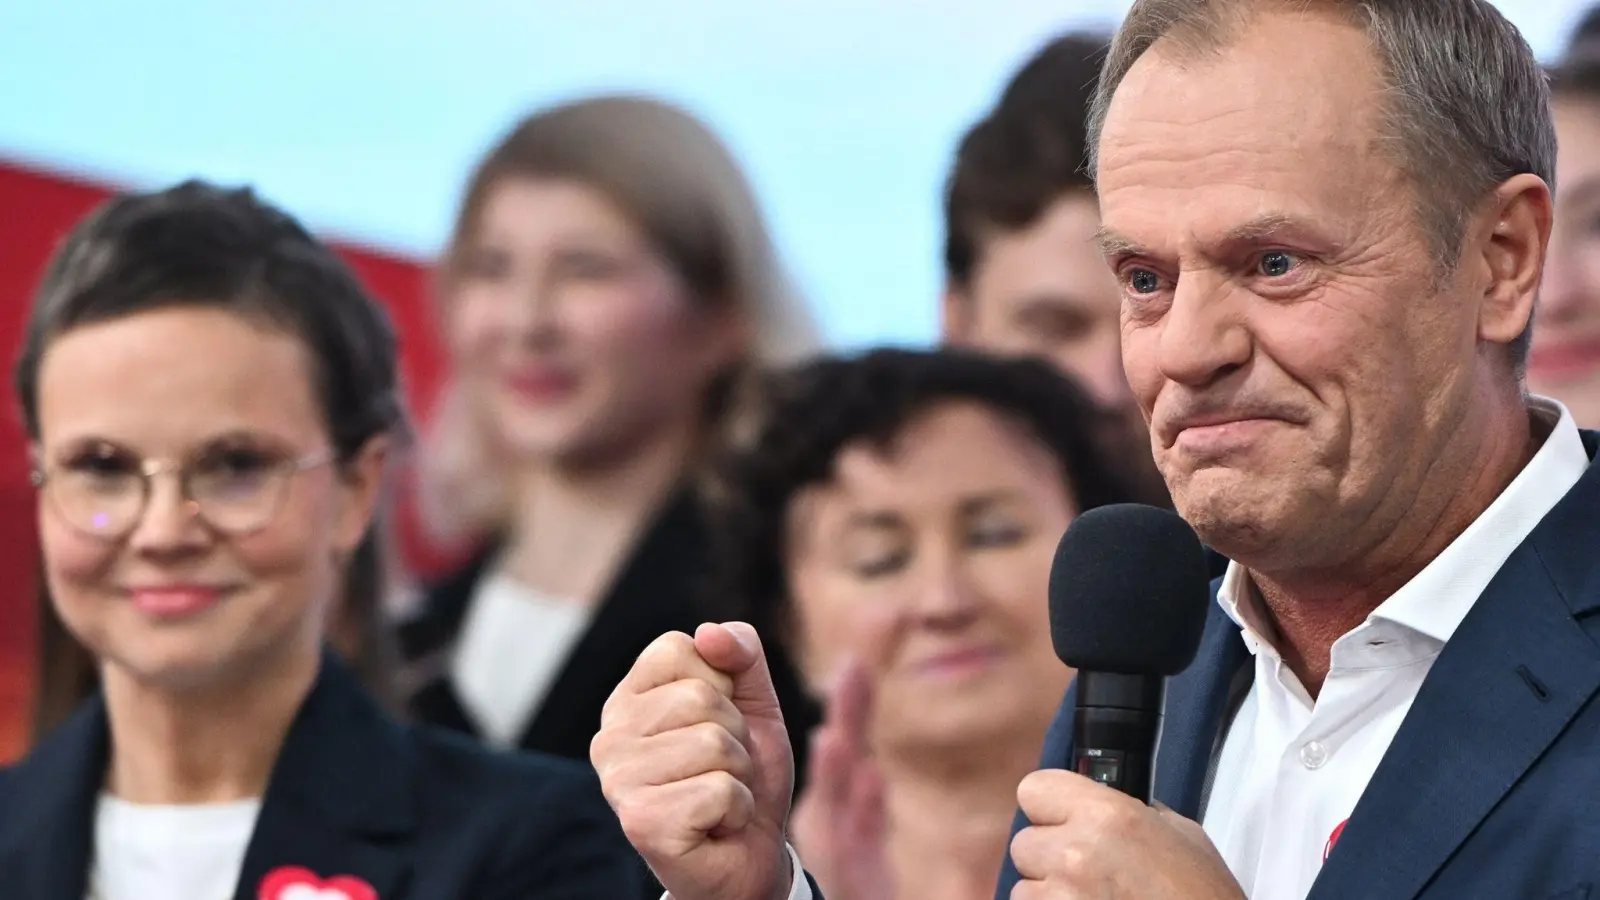 Oppositionsführer Donald Tusk könnte neuer polnischer Ministerpräsident werden. (Foto: Piotr Nowak/PAP/dpa)